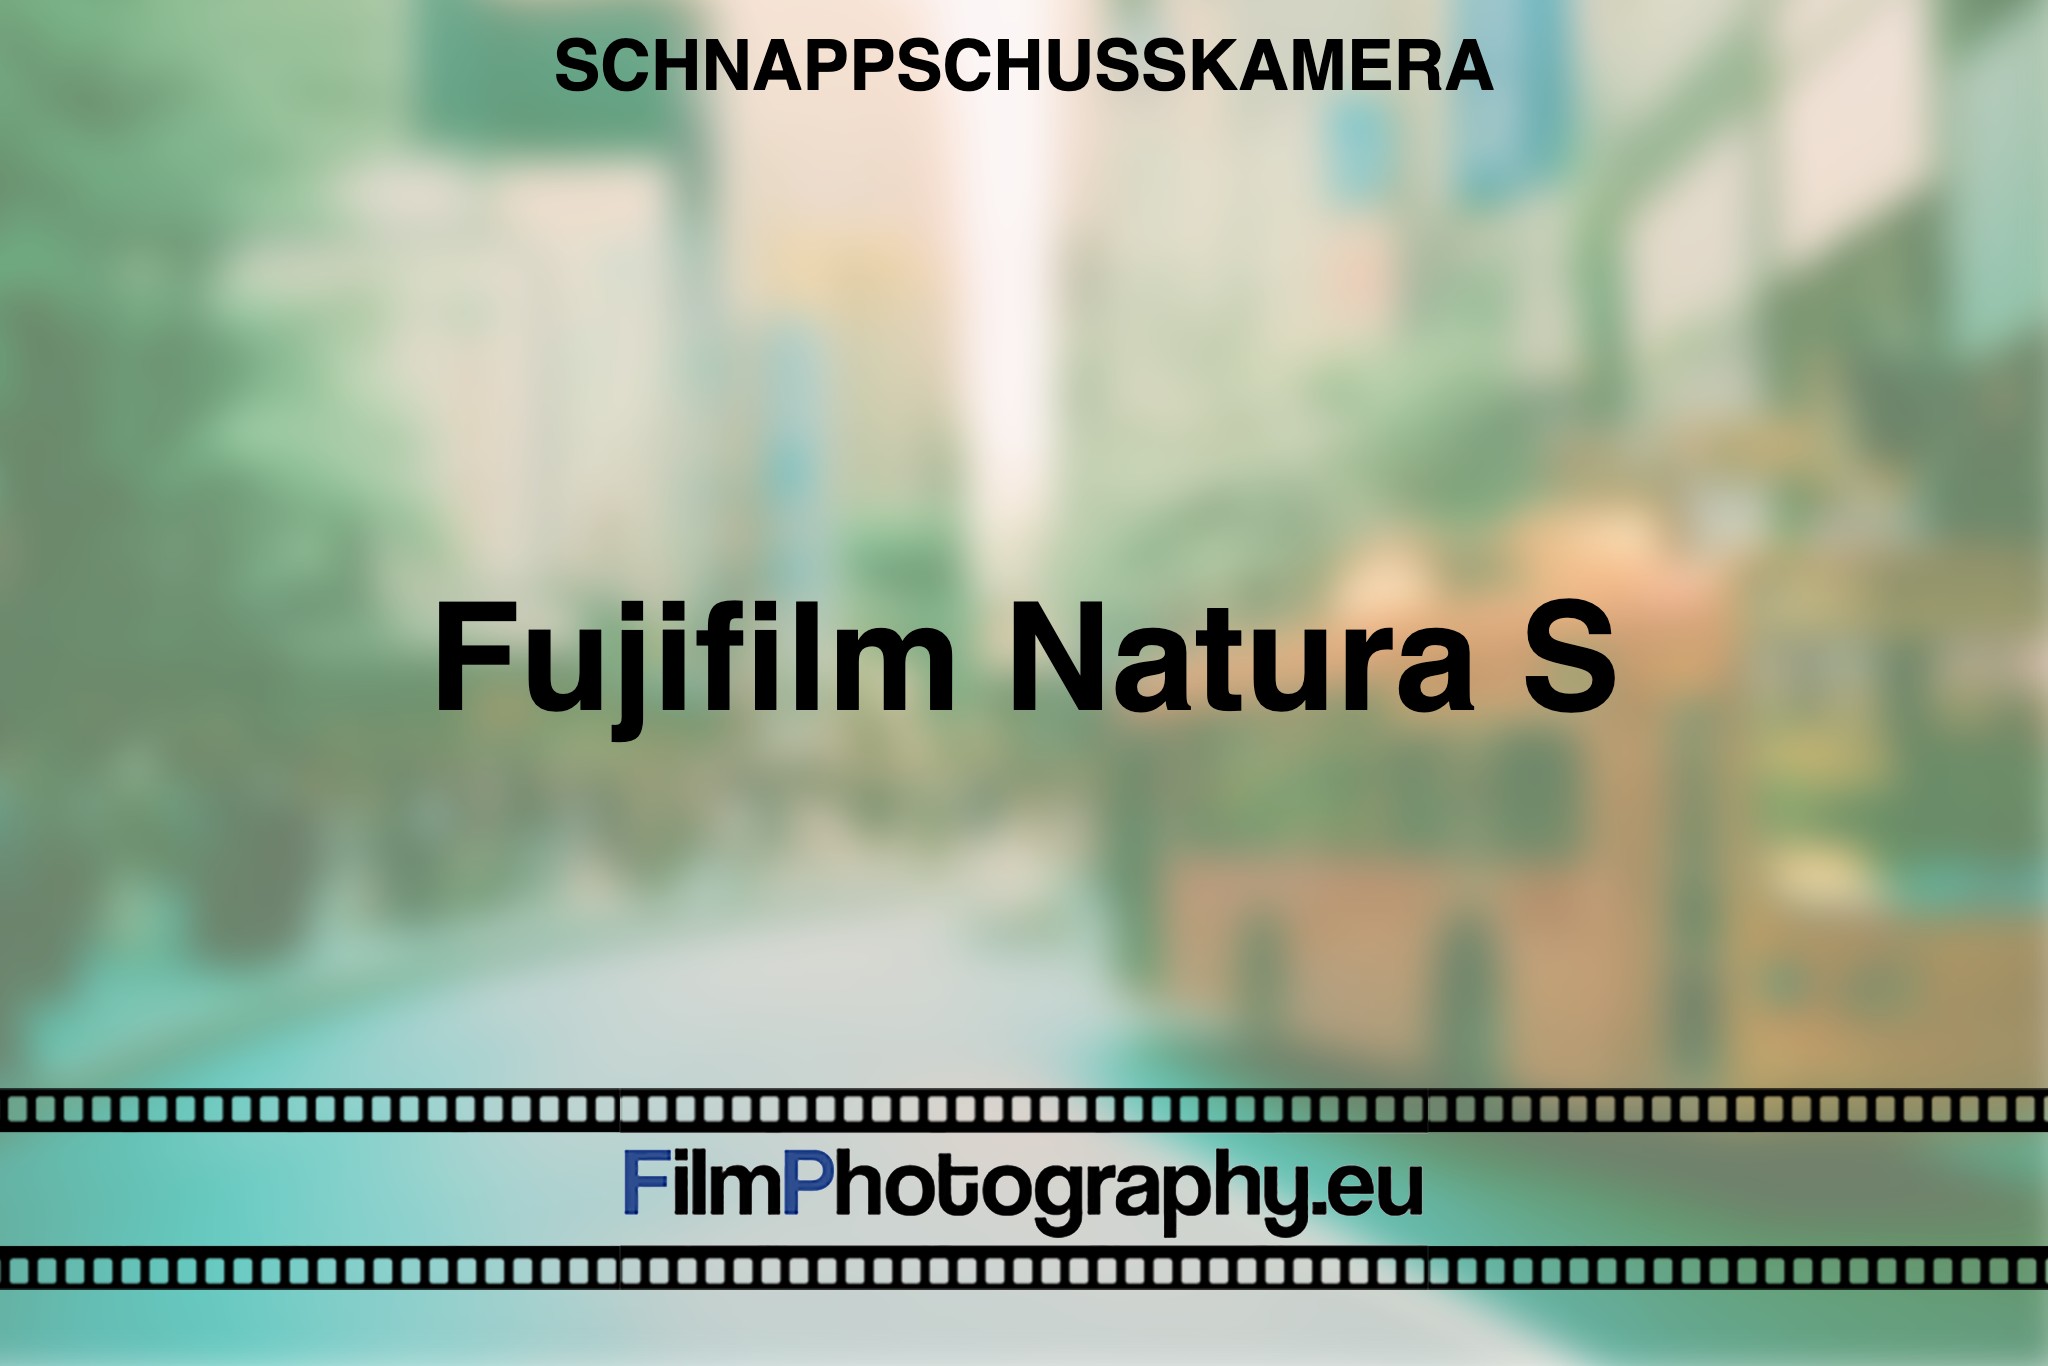 fujifilm-natura-s-schnappschusskamera-bnv